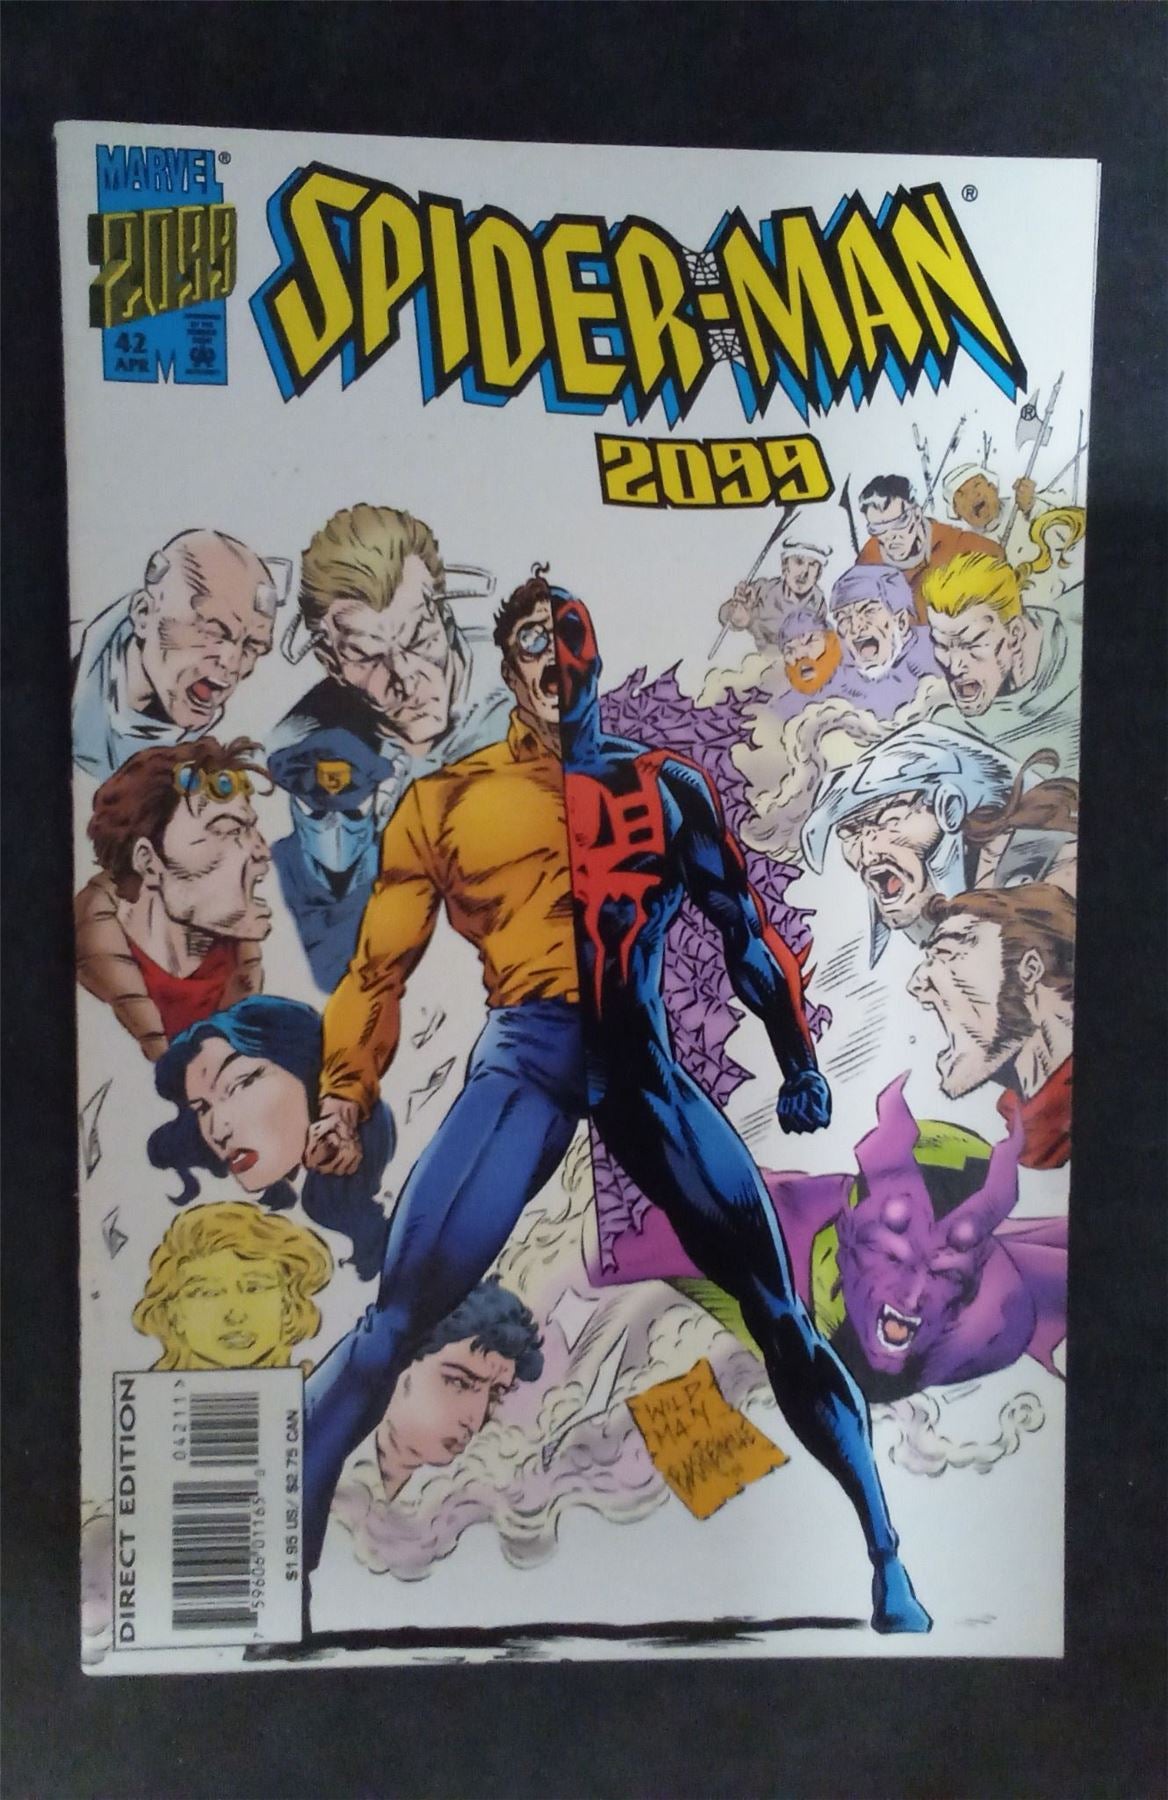 Spider-Man 2099 #42 1996 marvel Comic Book